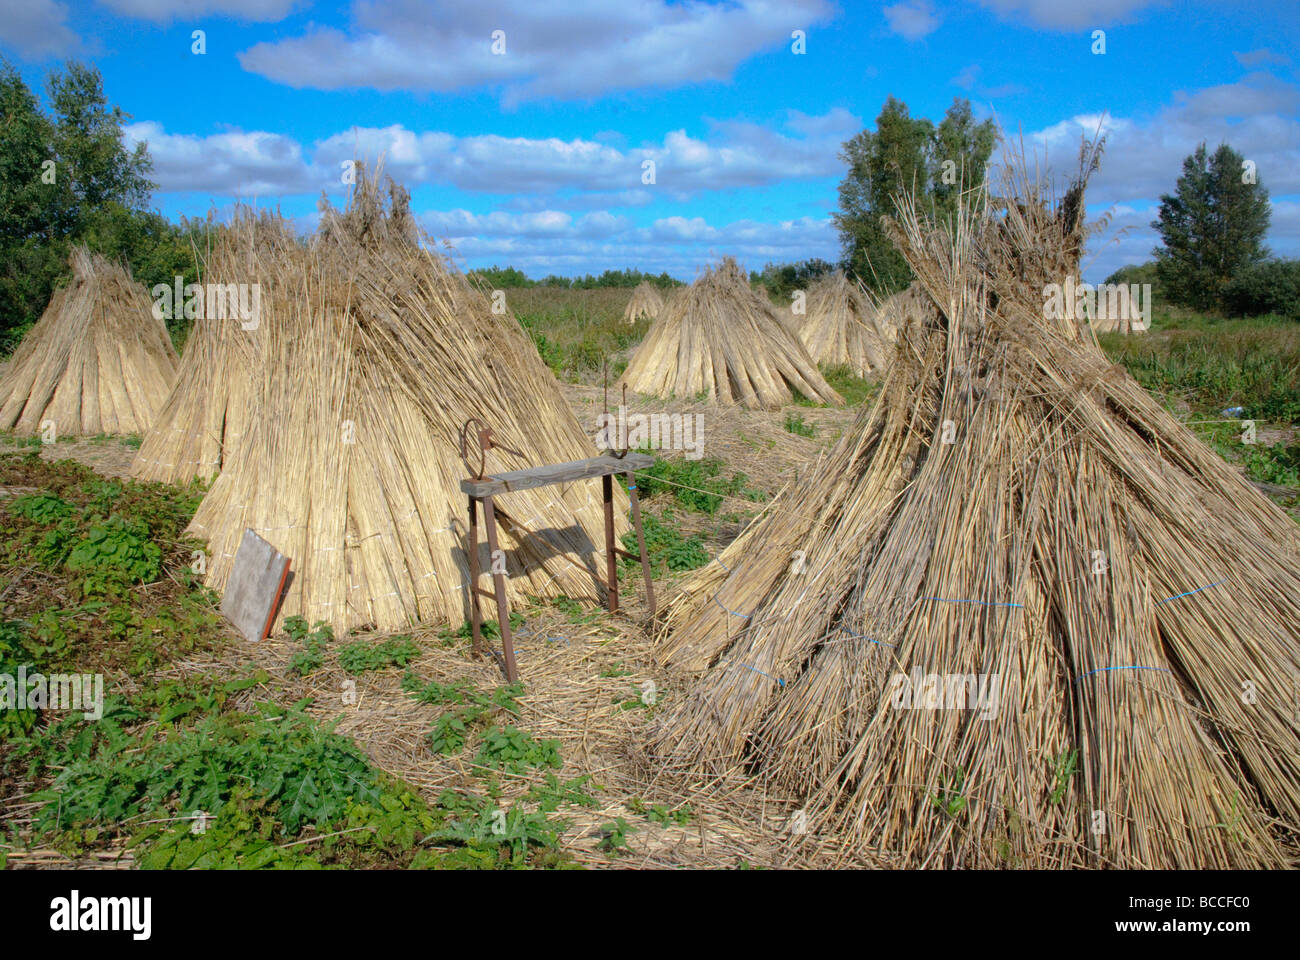 Stacked up reed bundles in Pape, Lurzeme, Latvia Stock Photo